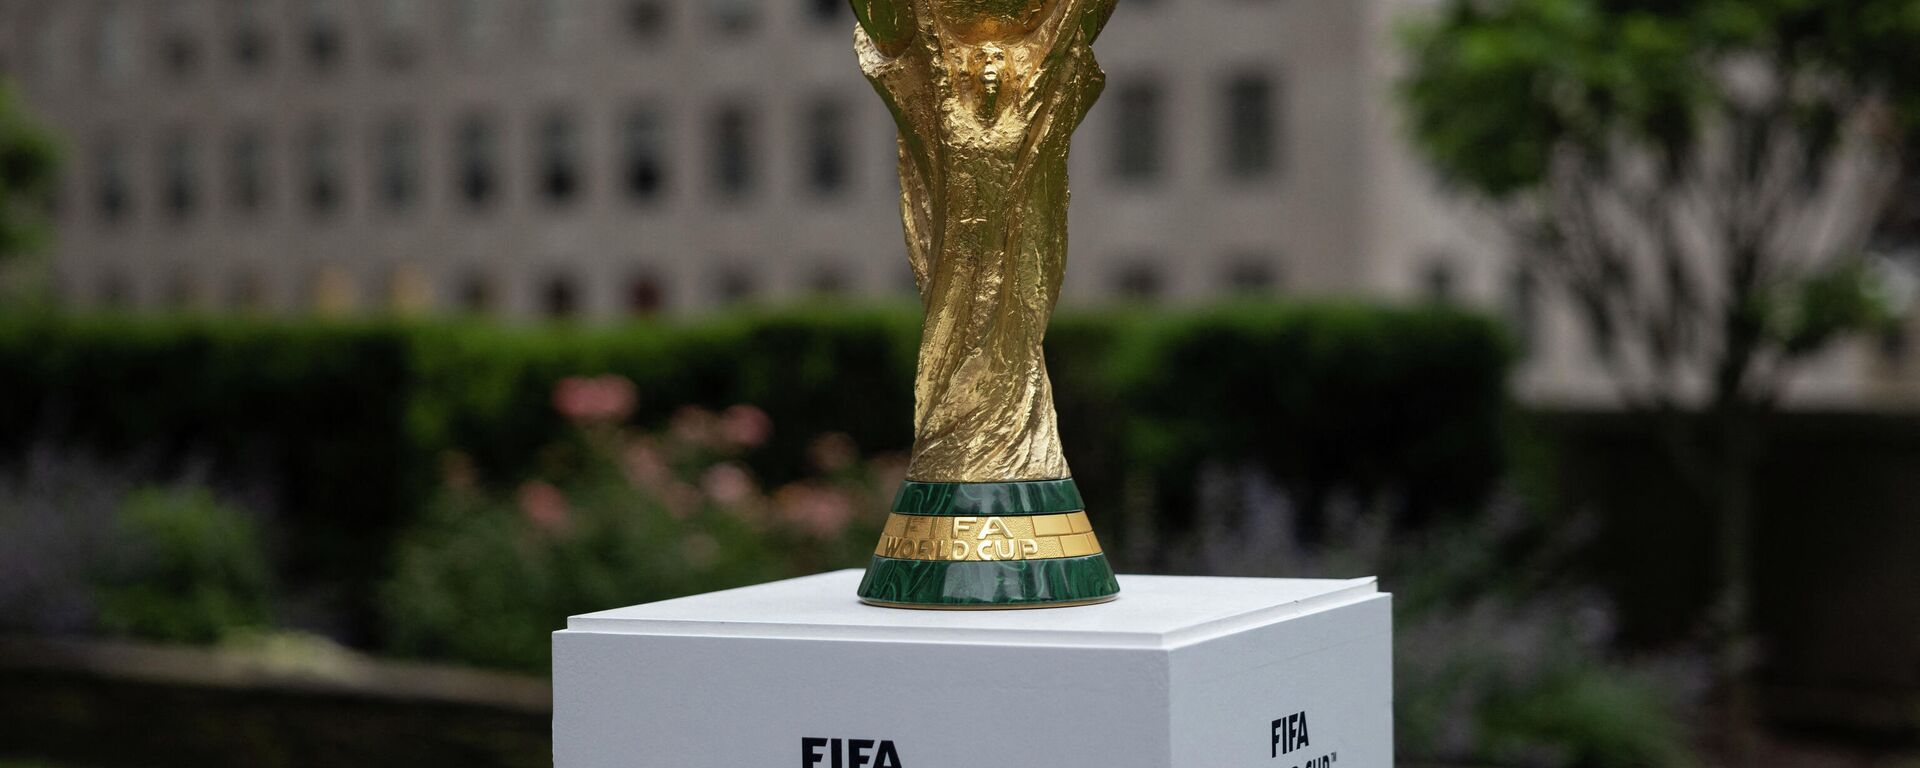 FIFA公布2026美加墨世界杯16座主办城市 - 俄罗斯卫星通讯社, 1920, 17.06.2022